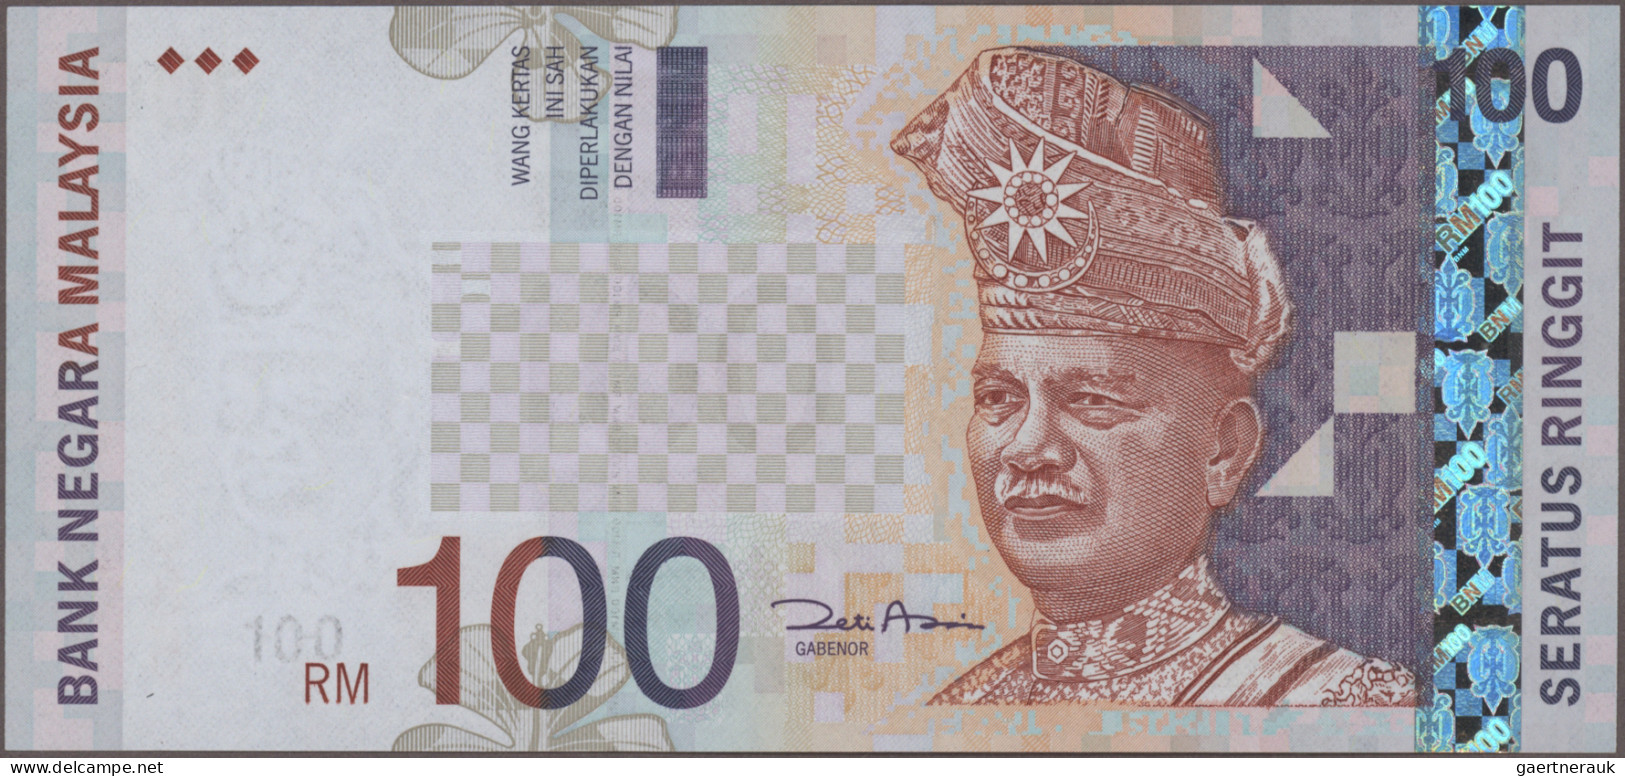 Malaysia: Bank Negara Malaysia, Lot With 7 Banknotes, Series 1999-2011, With 1, - Malaysia